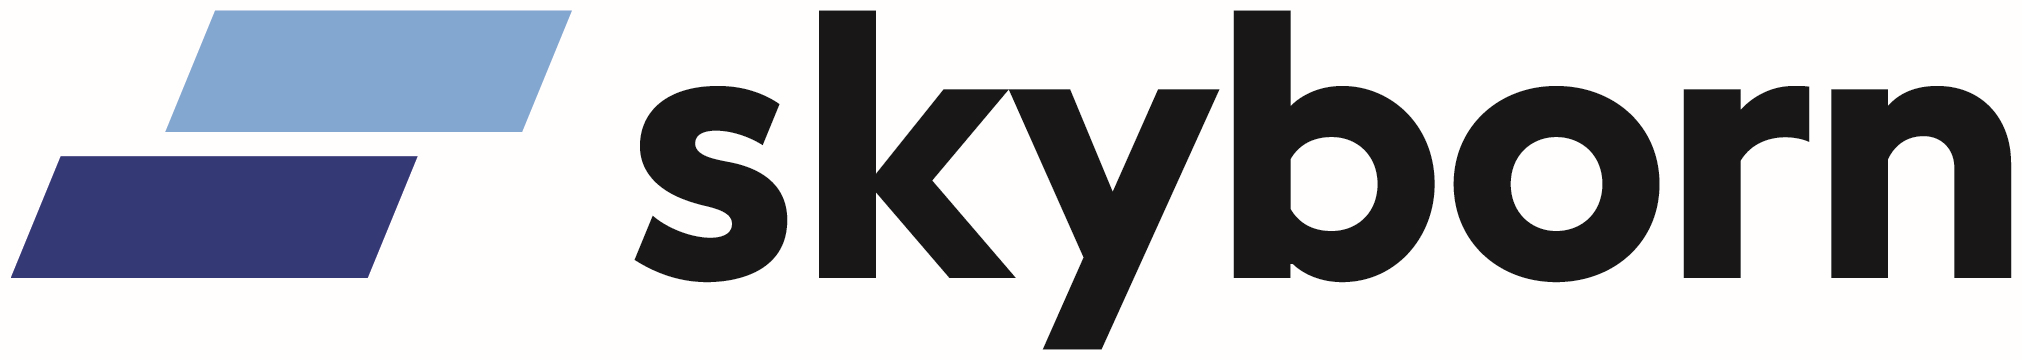 Skyborn logo